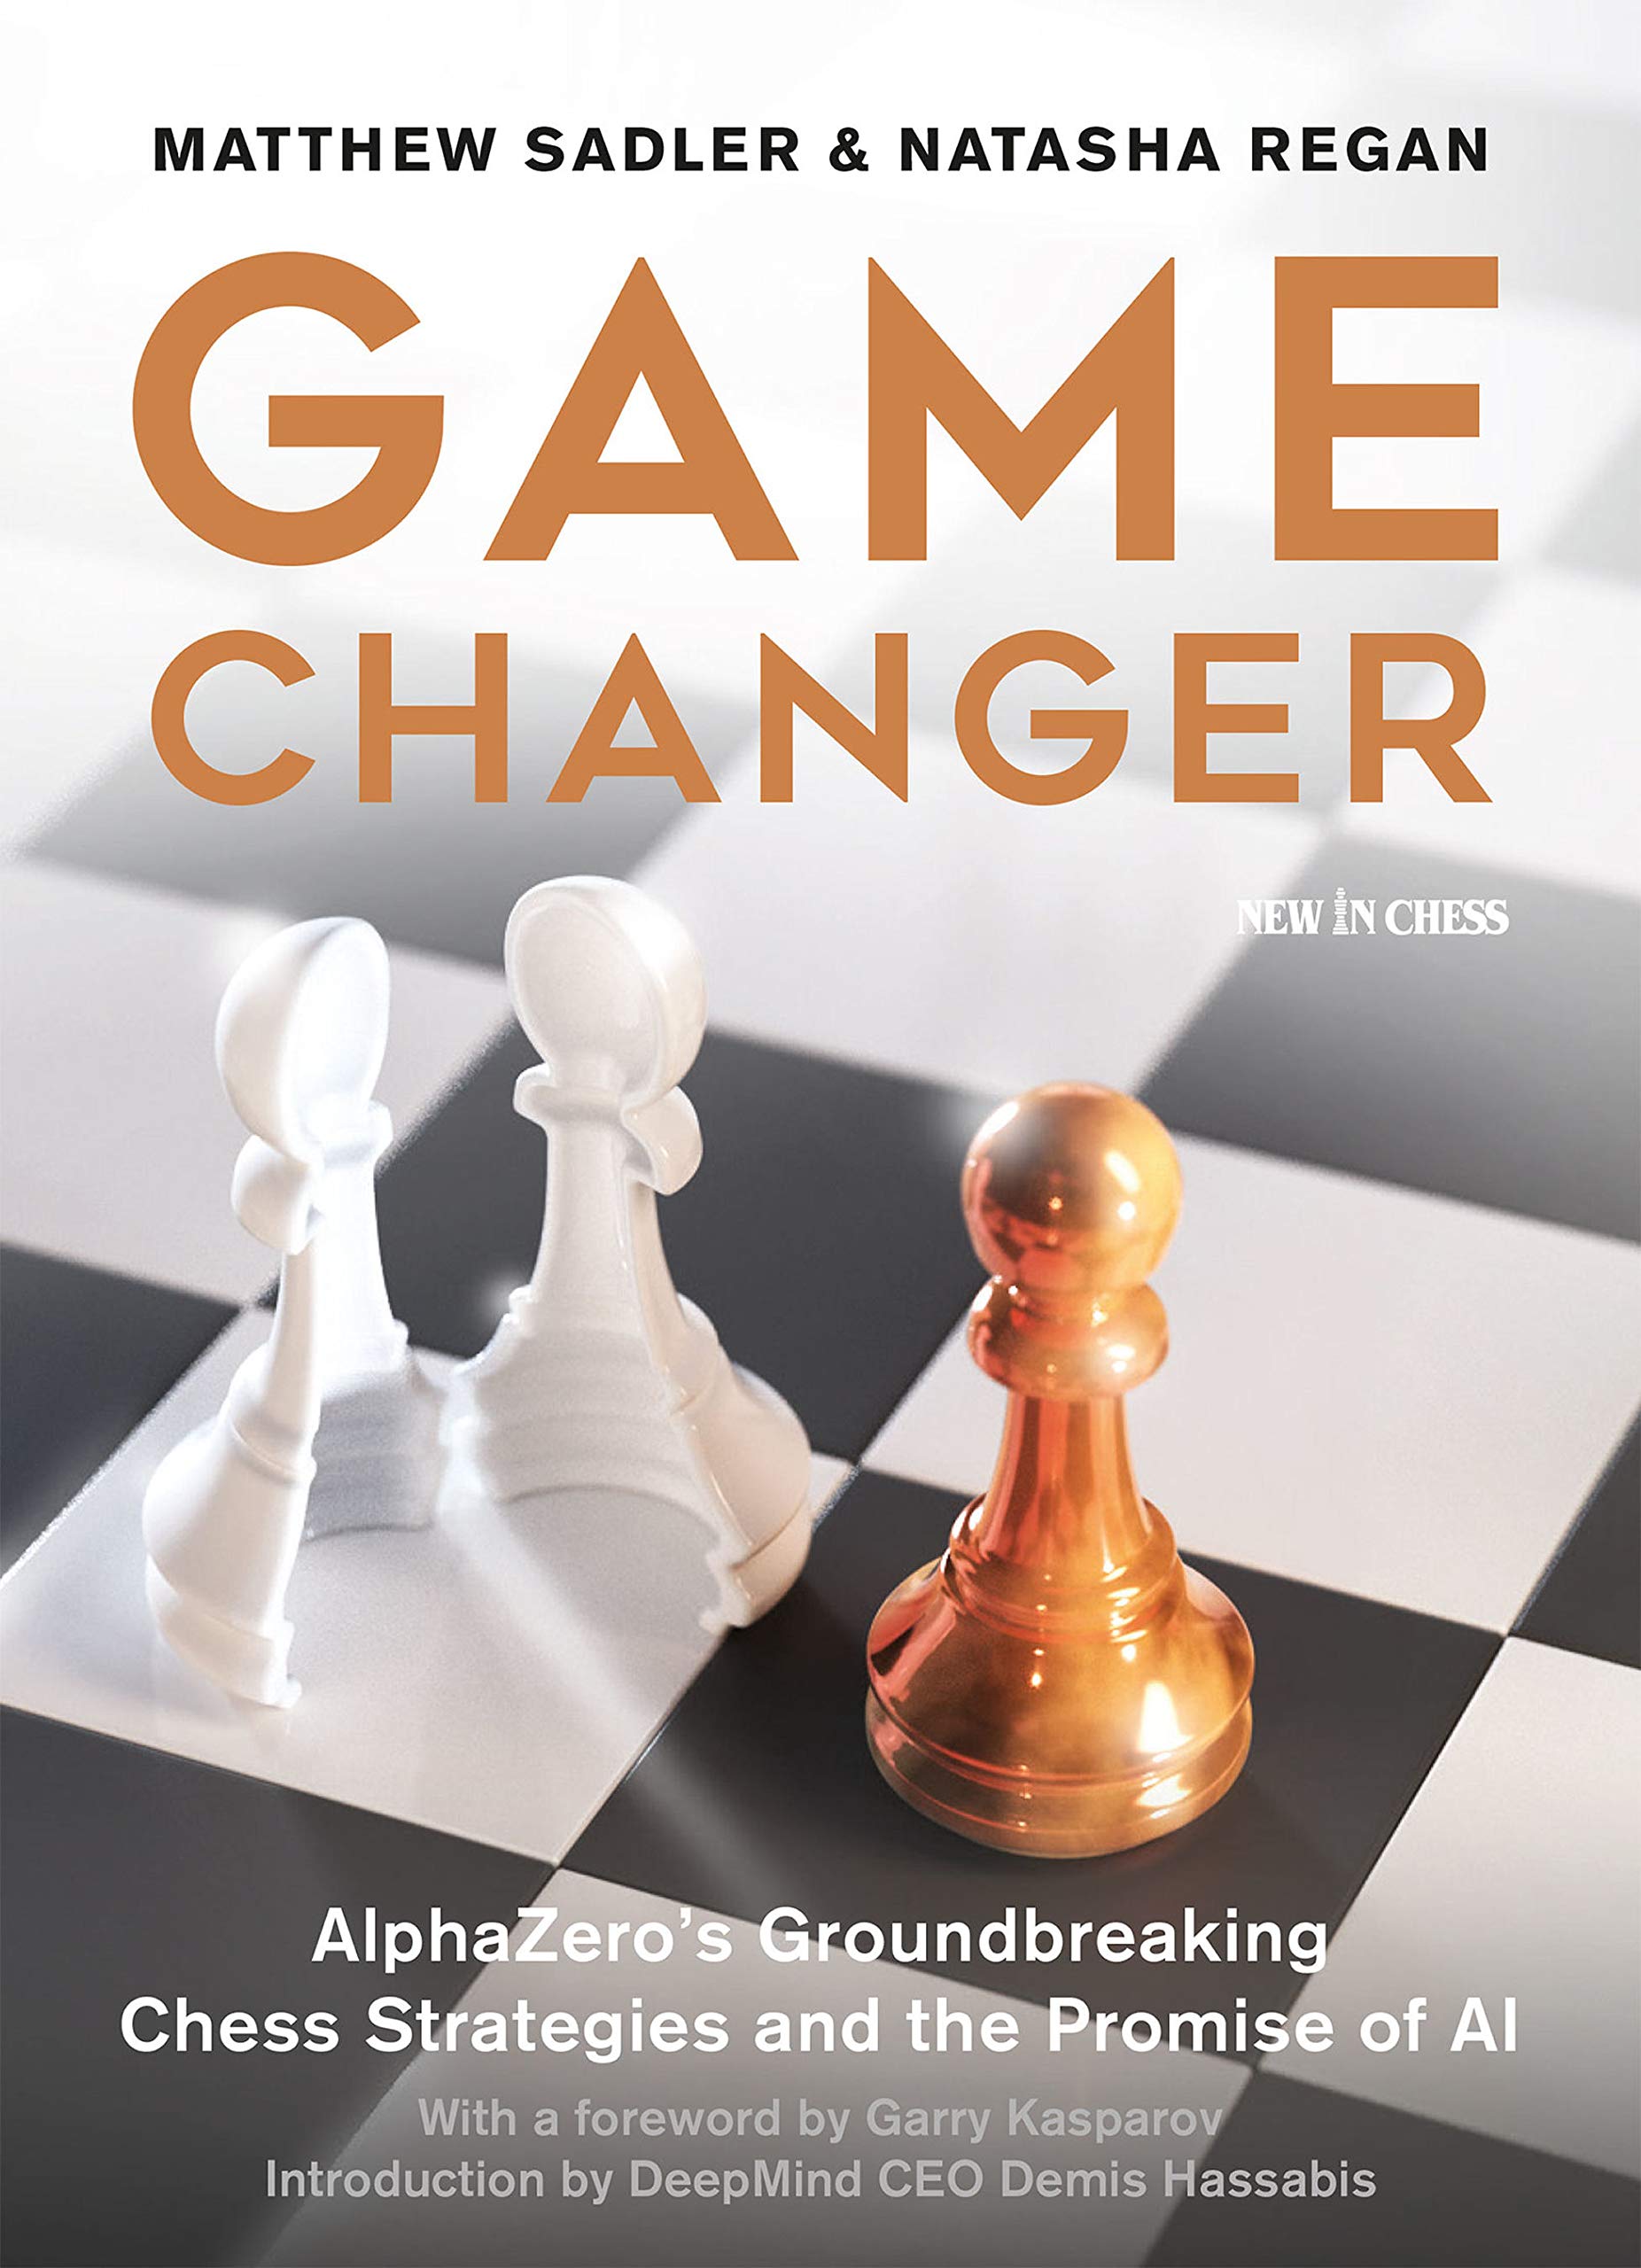 Game changer chess amazon